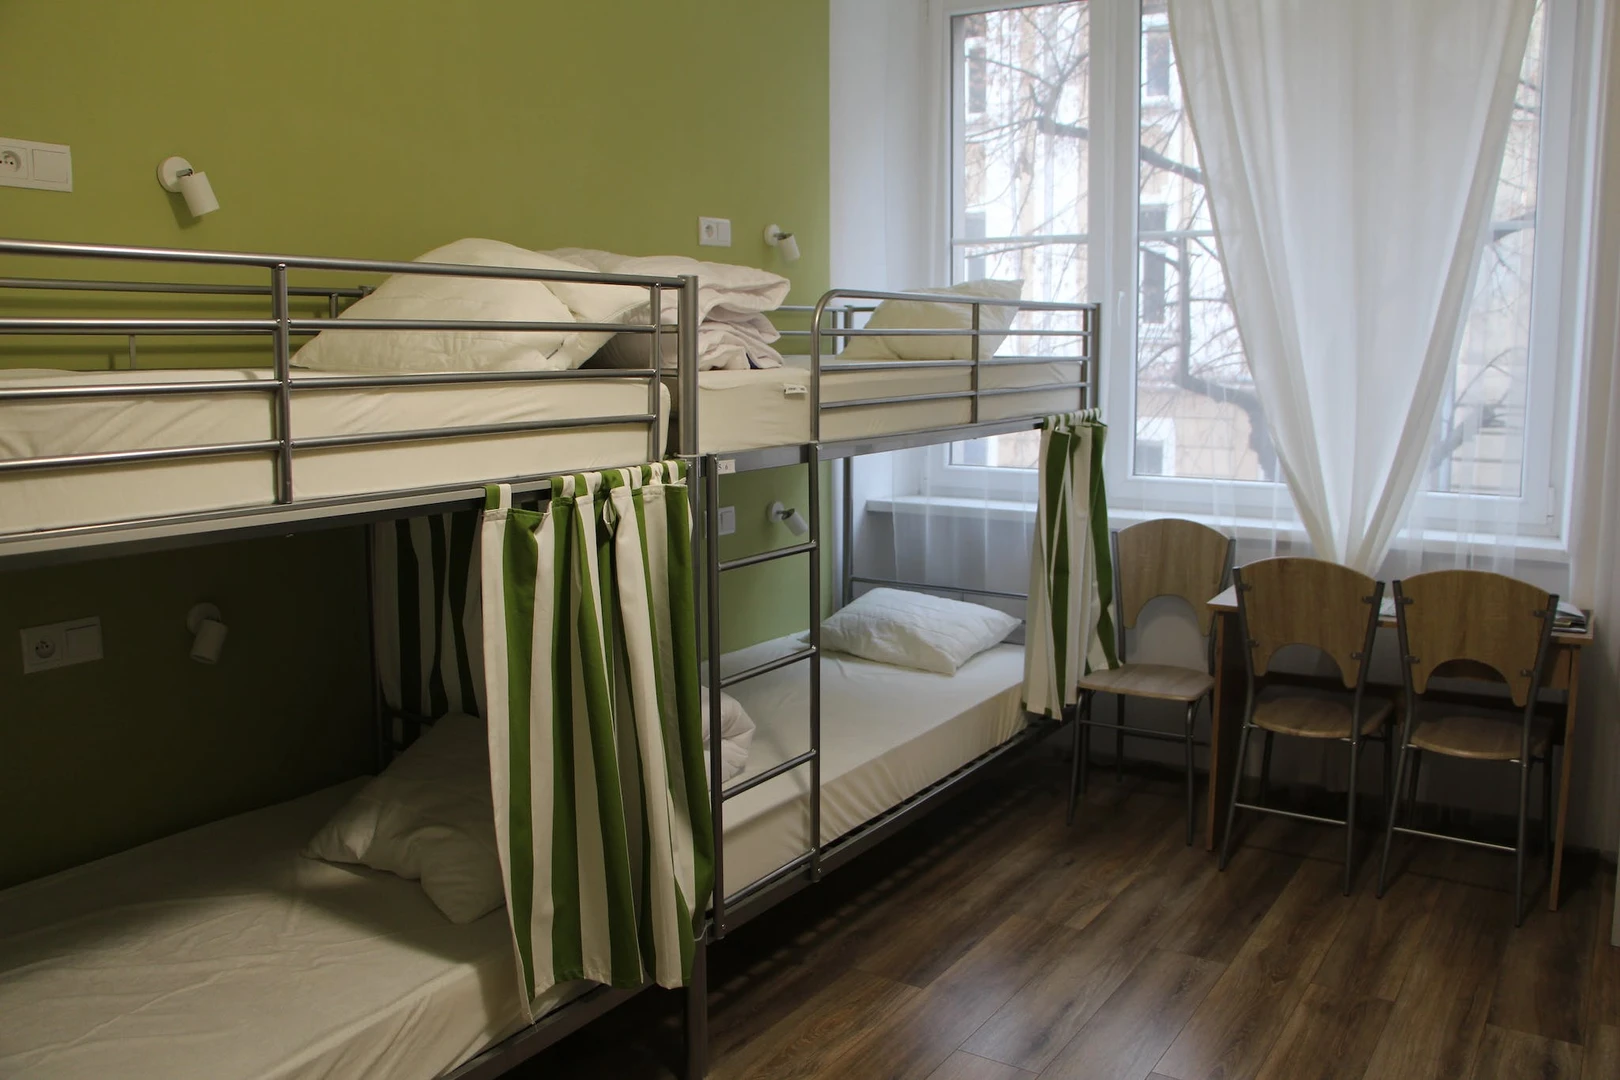 Shared room in 3-bedroom flat Krakow